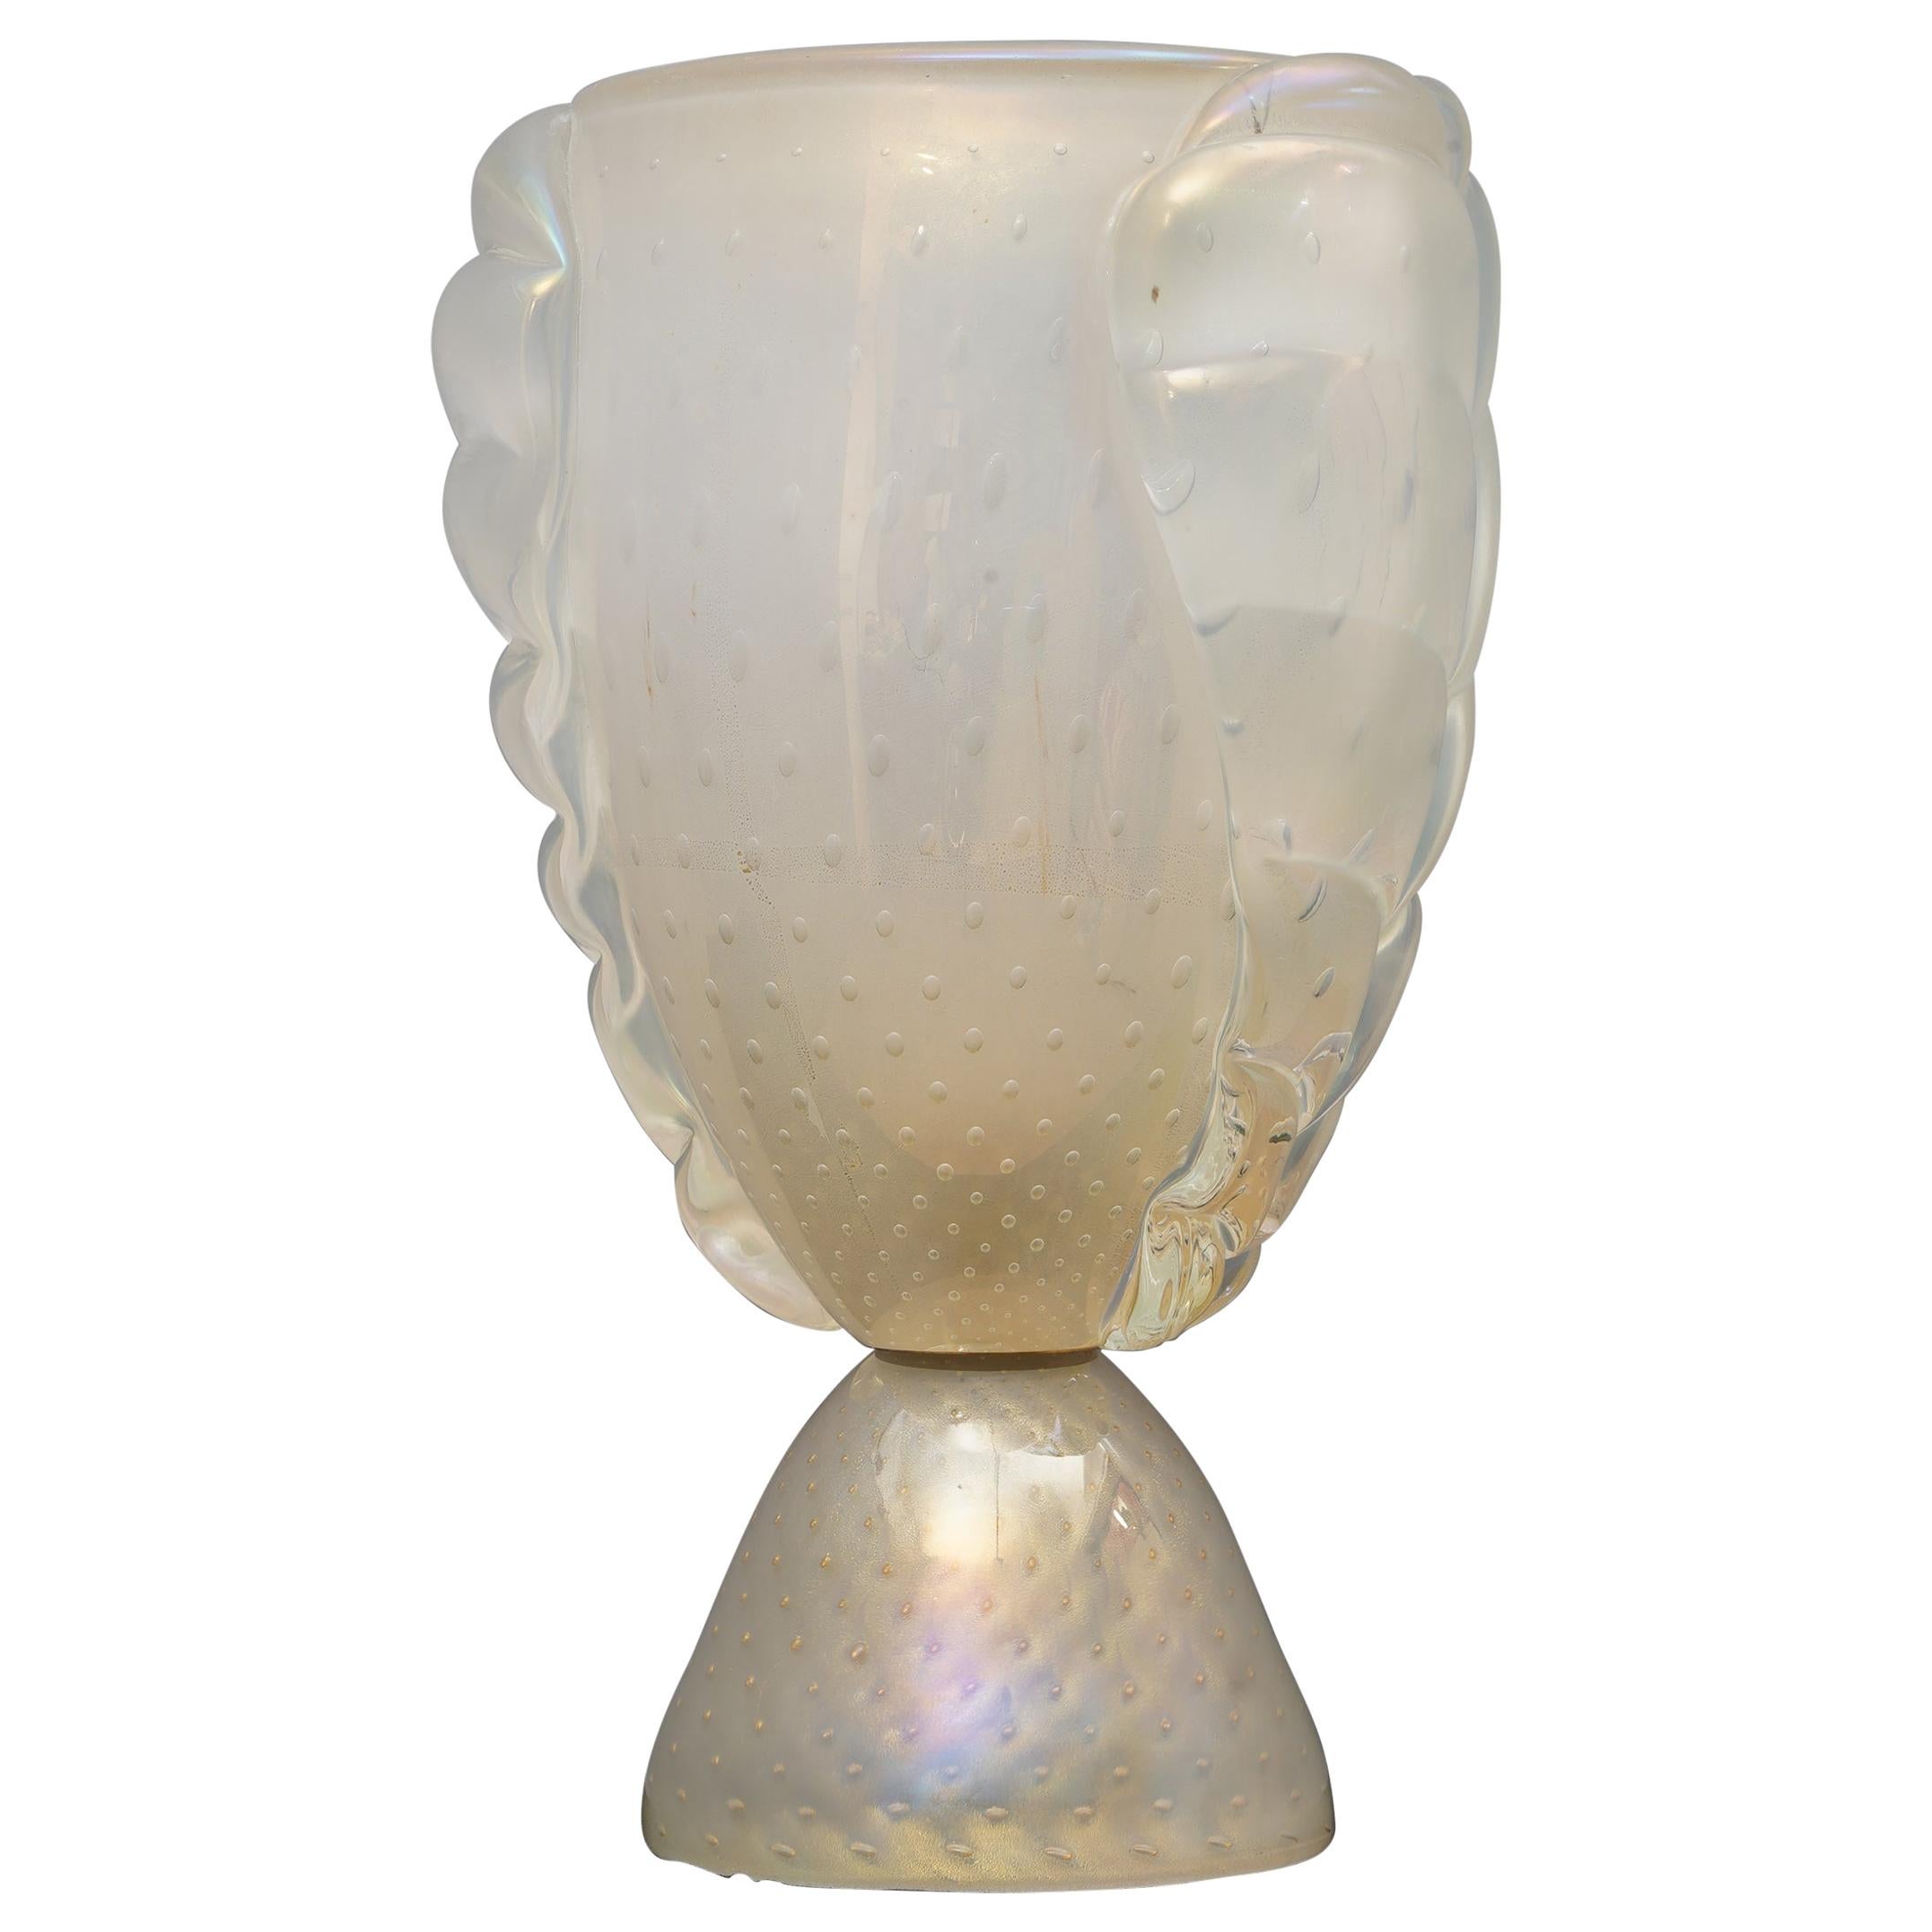 Barovier & Toso Murano Blown Glass Italian Midcentury Table Lamp, 1950